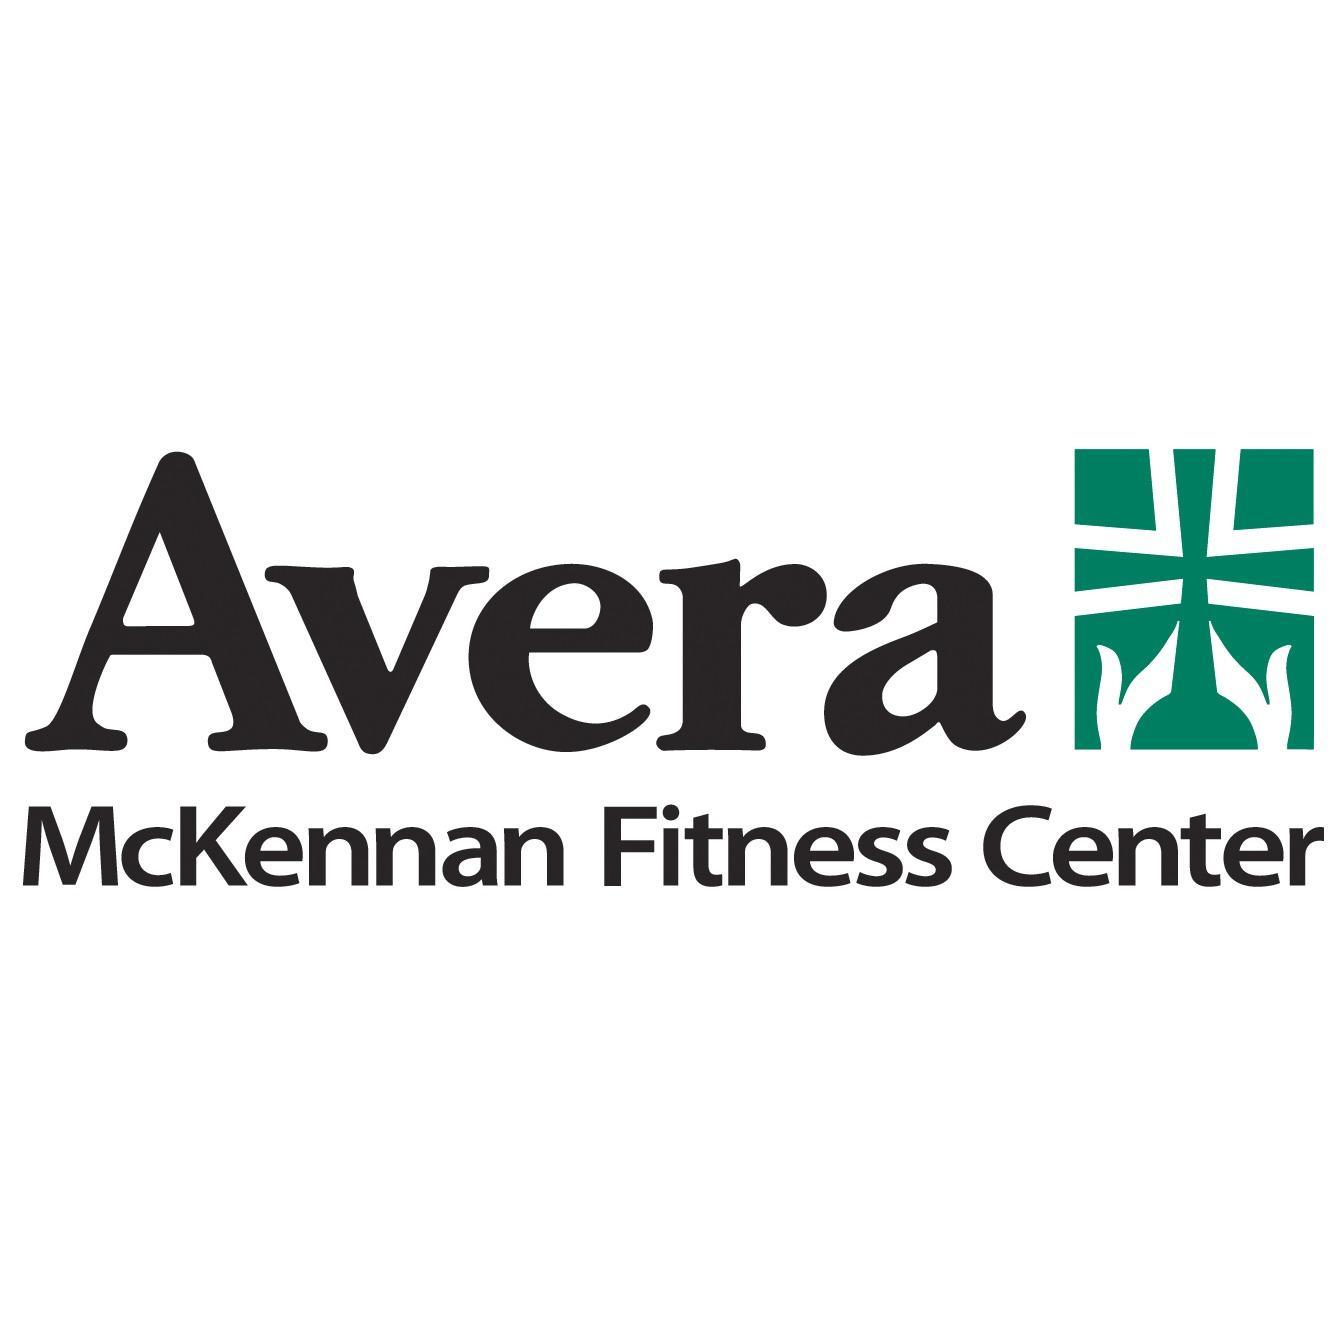 Avera McKennan Fitness Center - Sioux Falls, SD 57103 - (605)322-5300 | ShowMeLocal.com